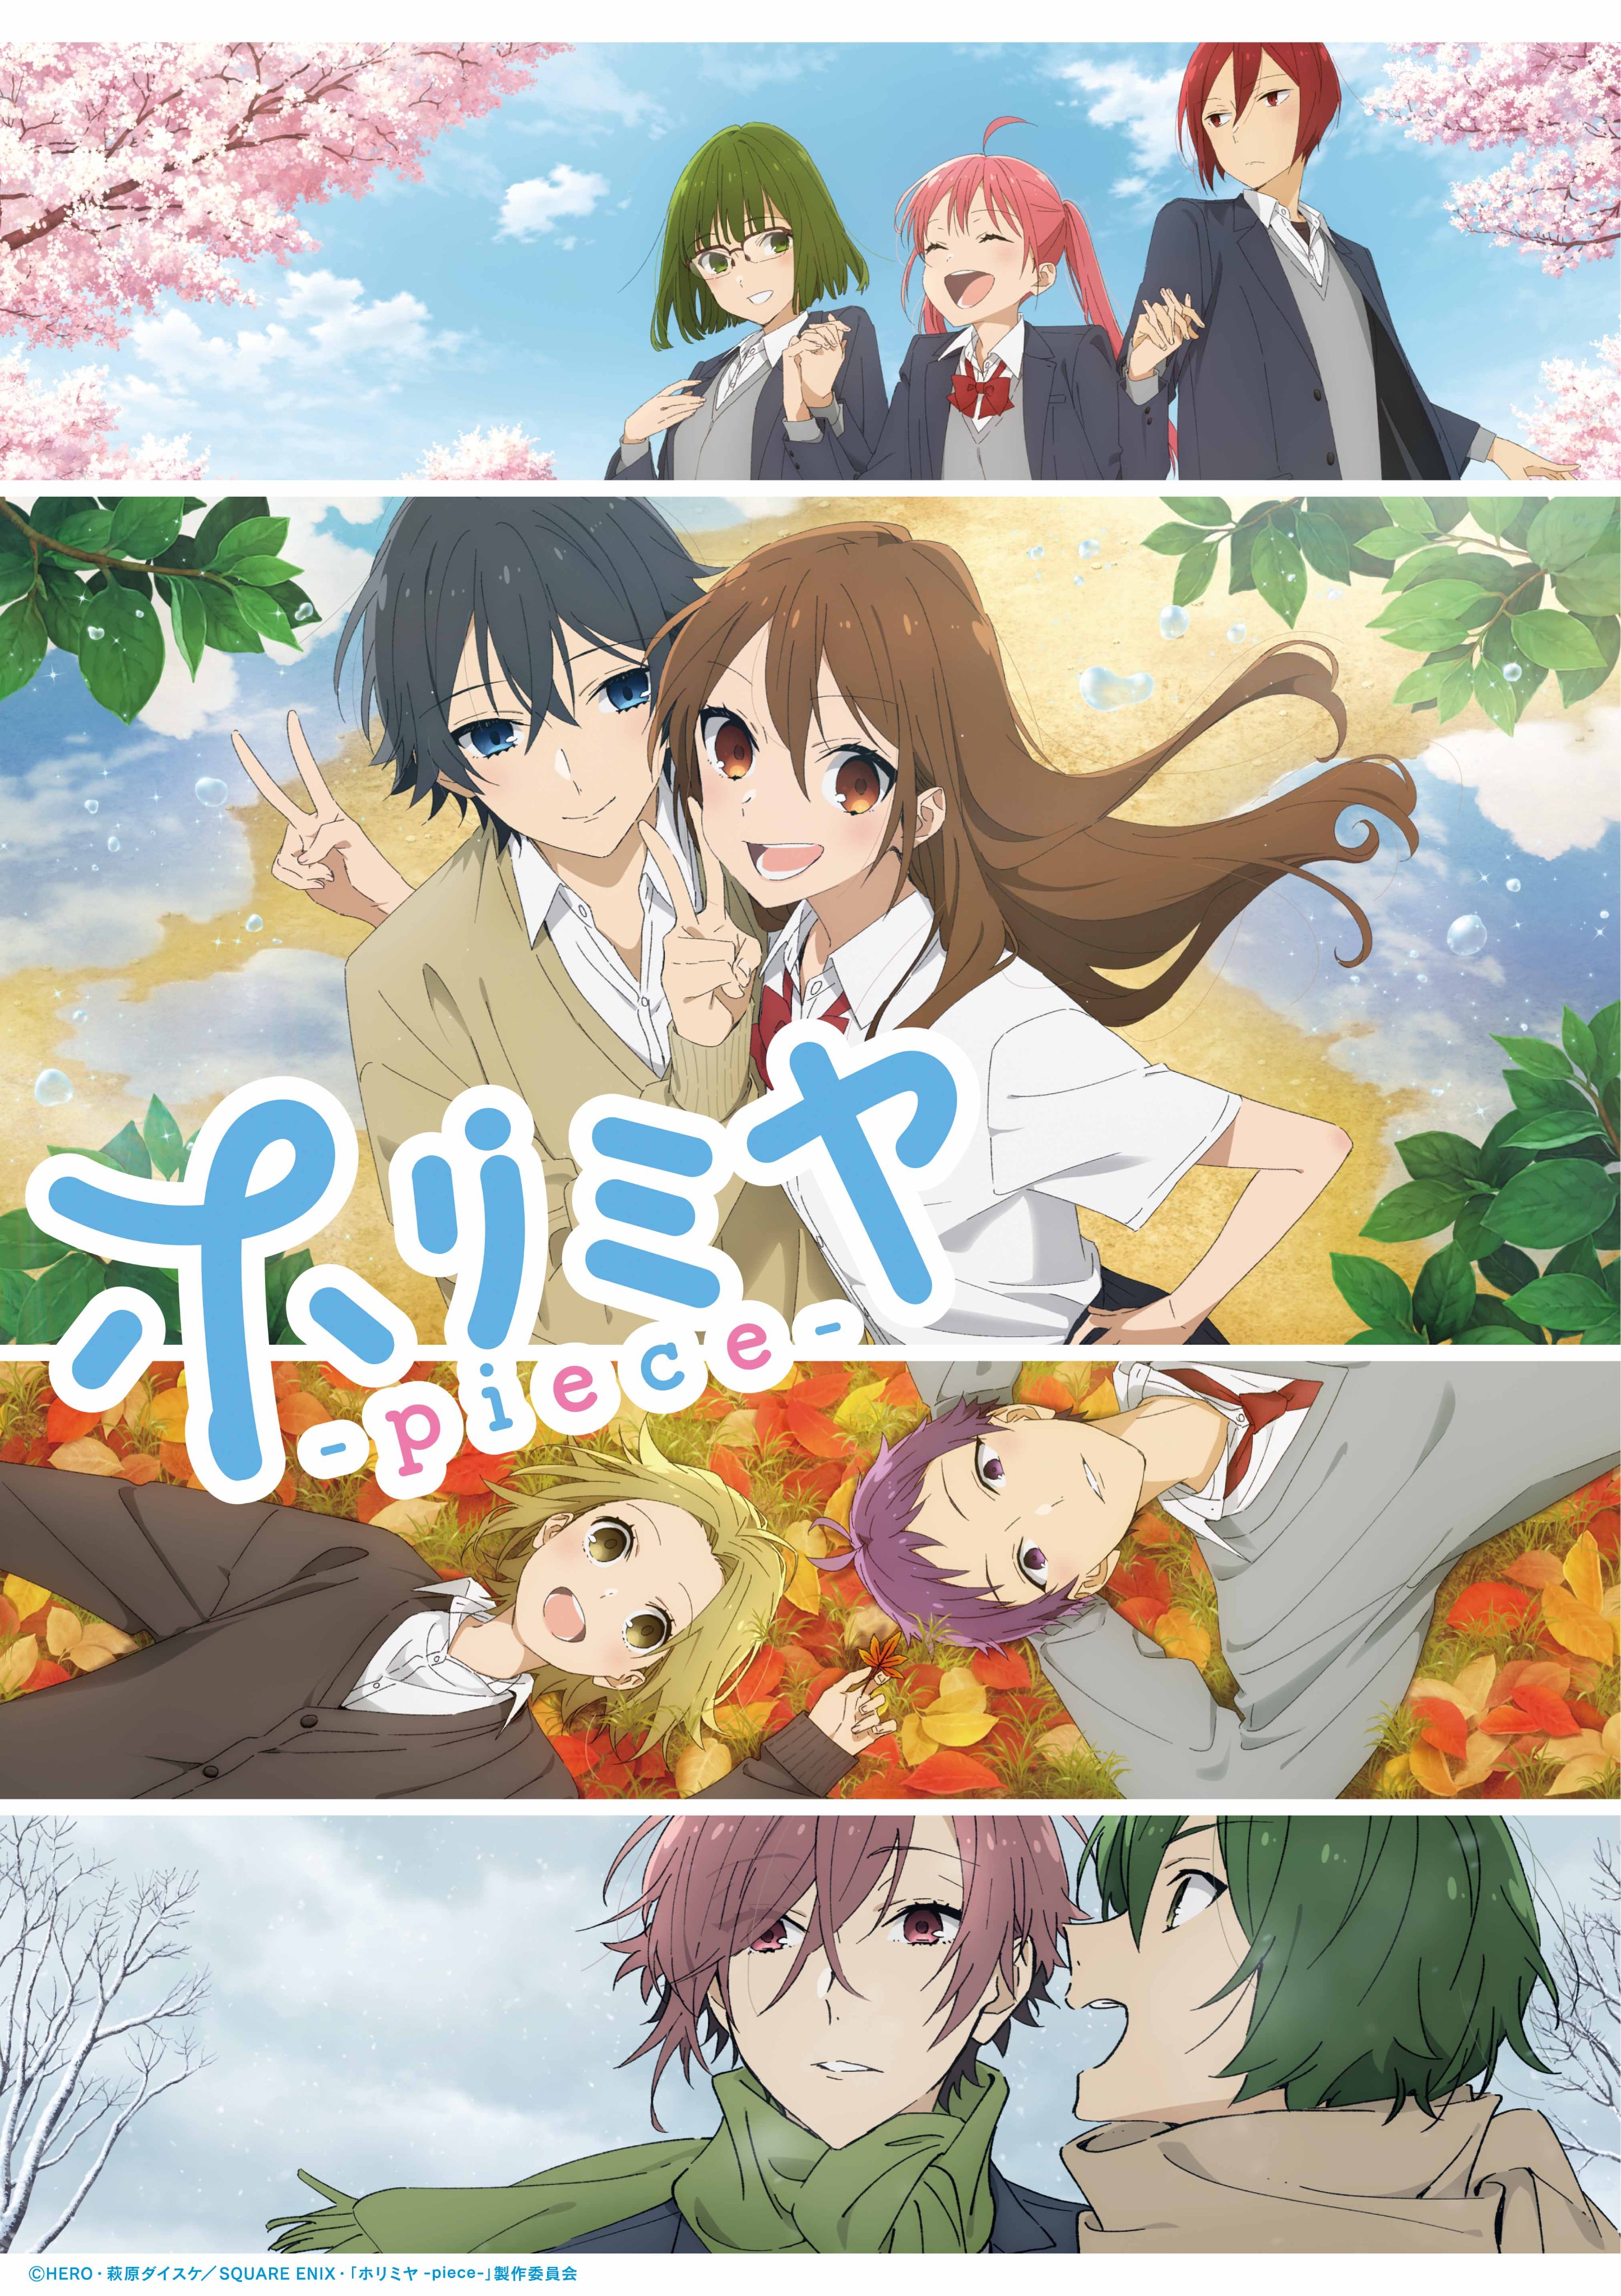 Bite-sized romance: 6 short romance anime for love on the go